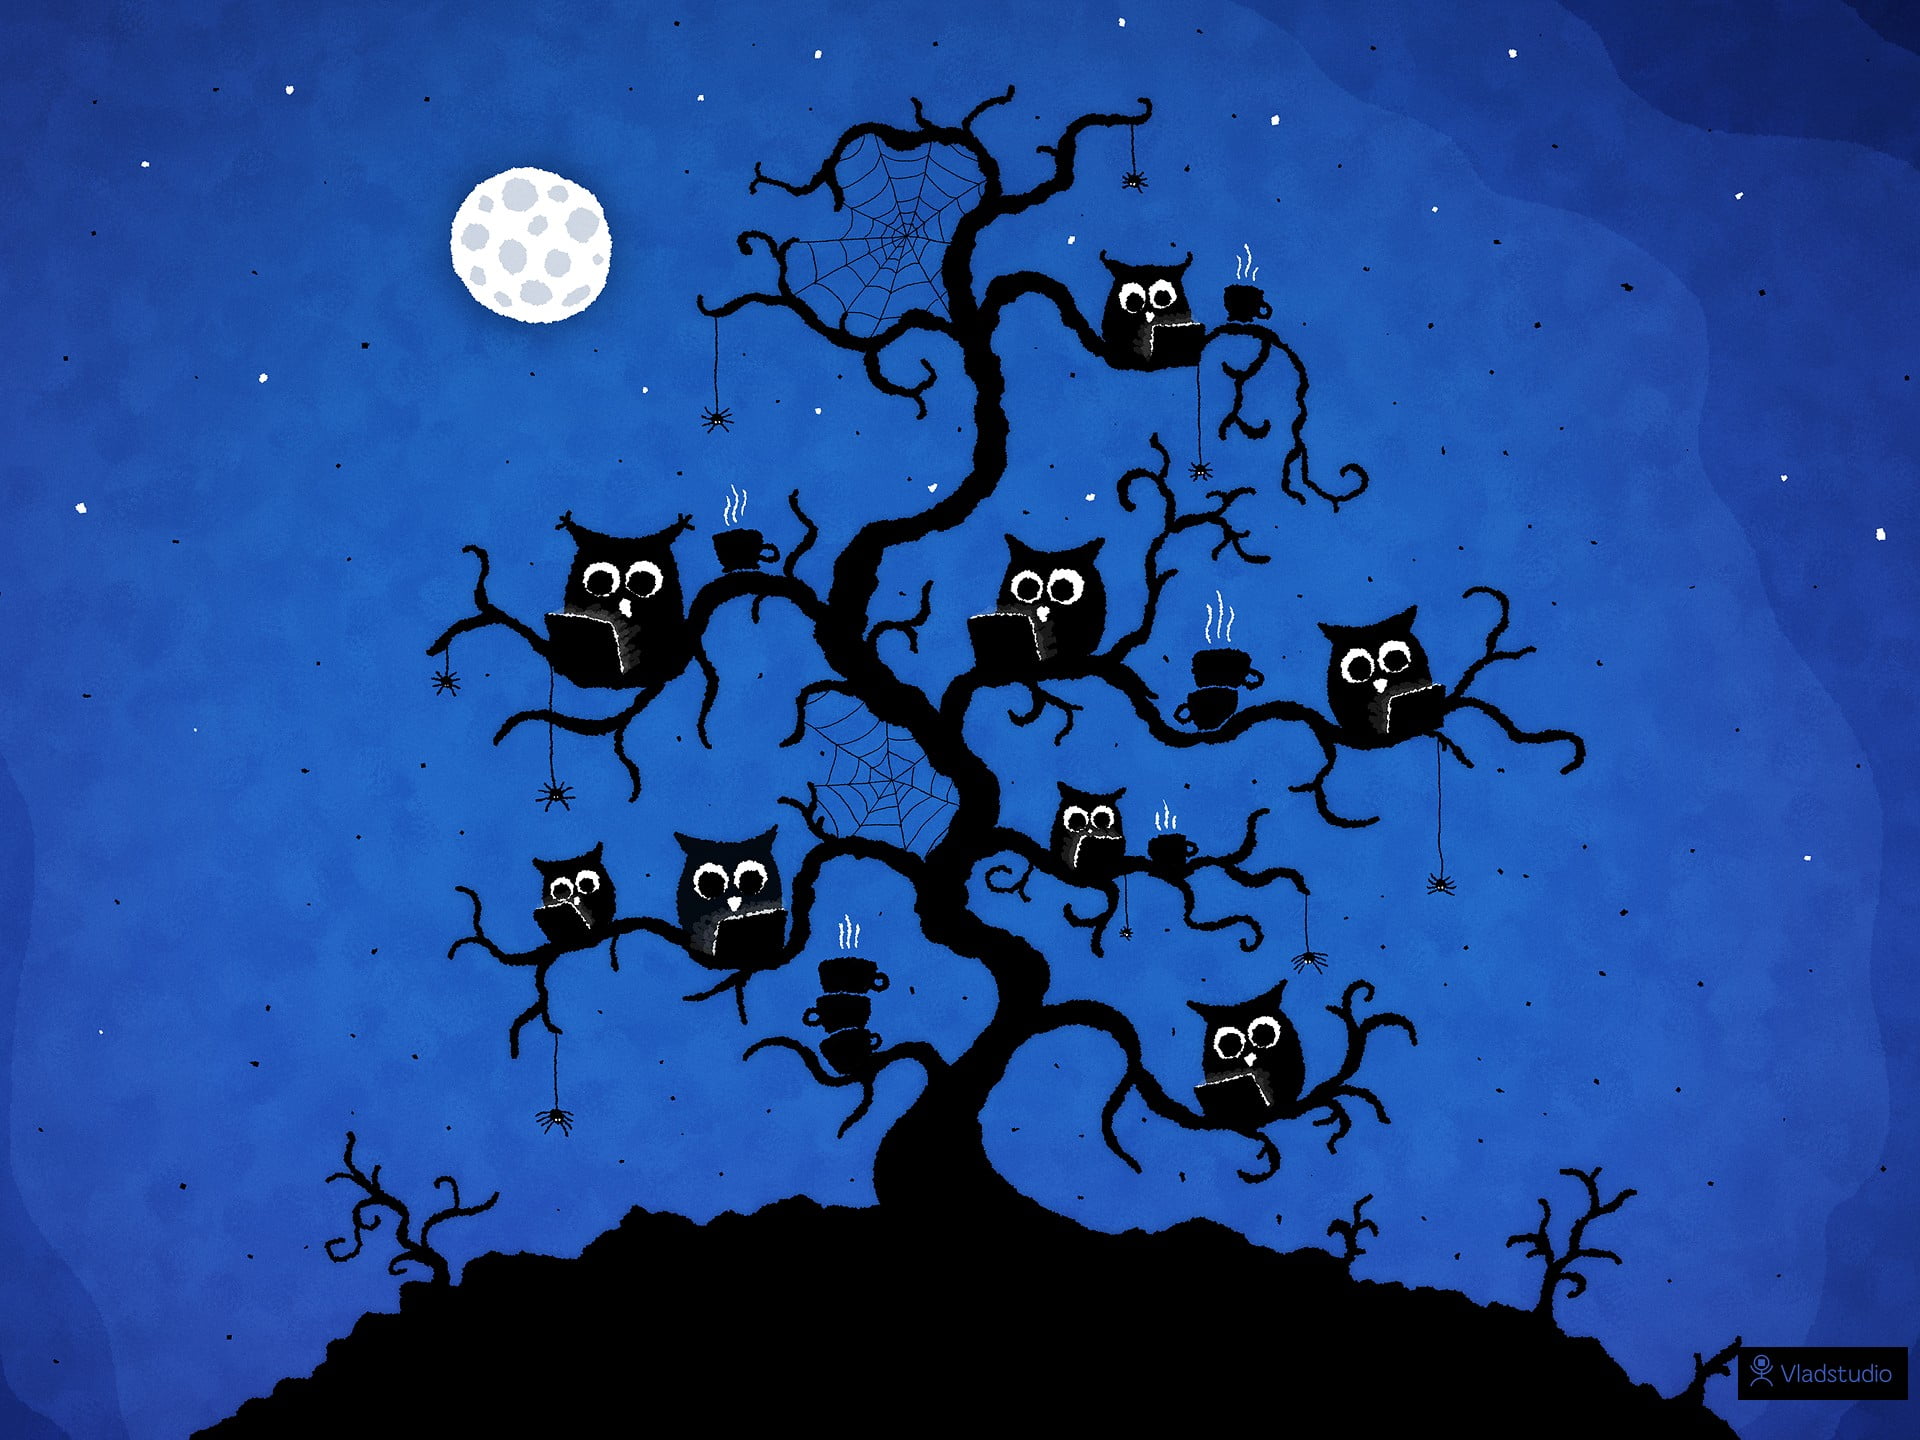 silhouette of bare tree and owls illustration, minimalism, pixel art, Vladstudio